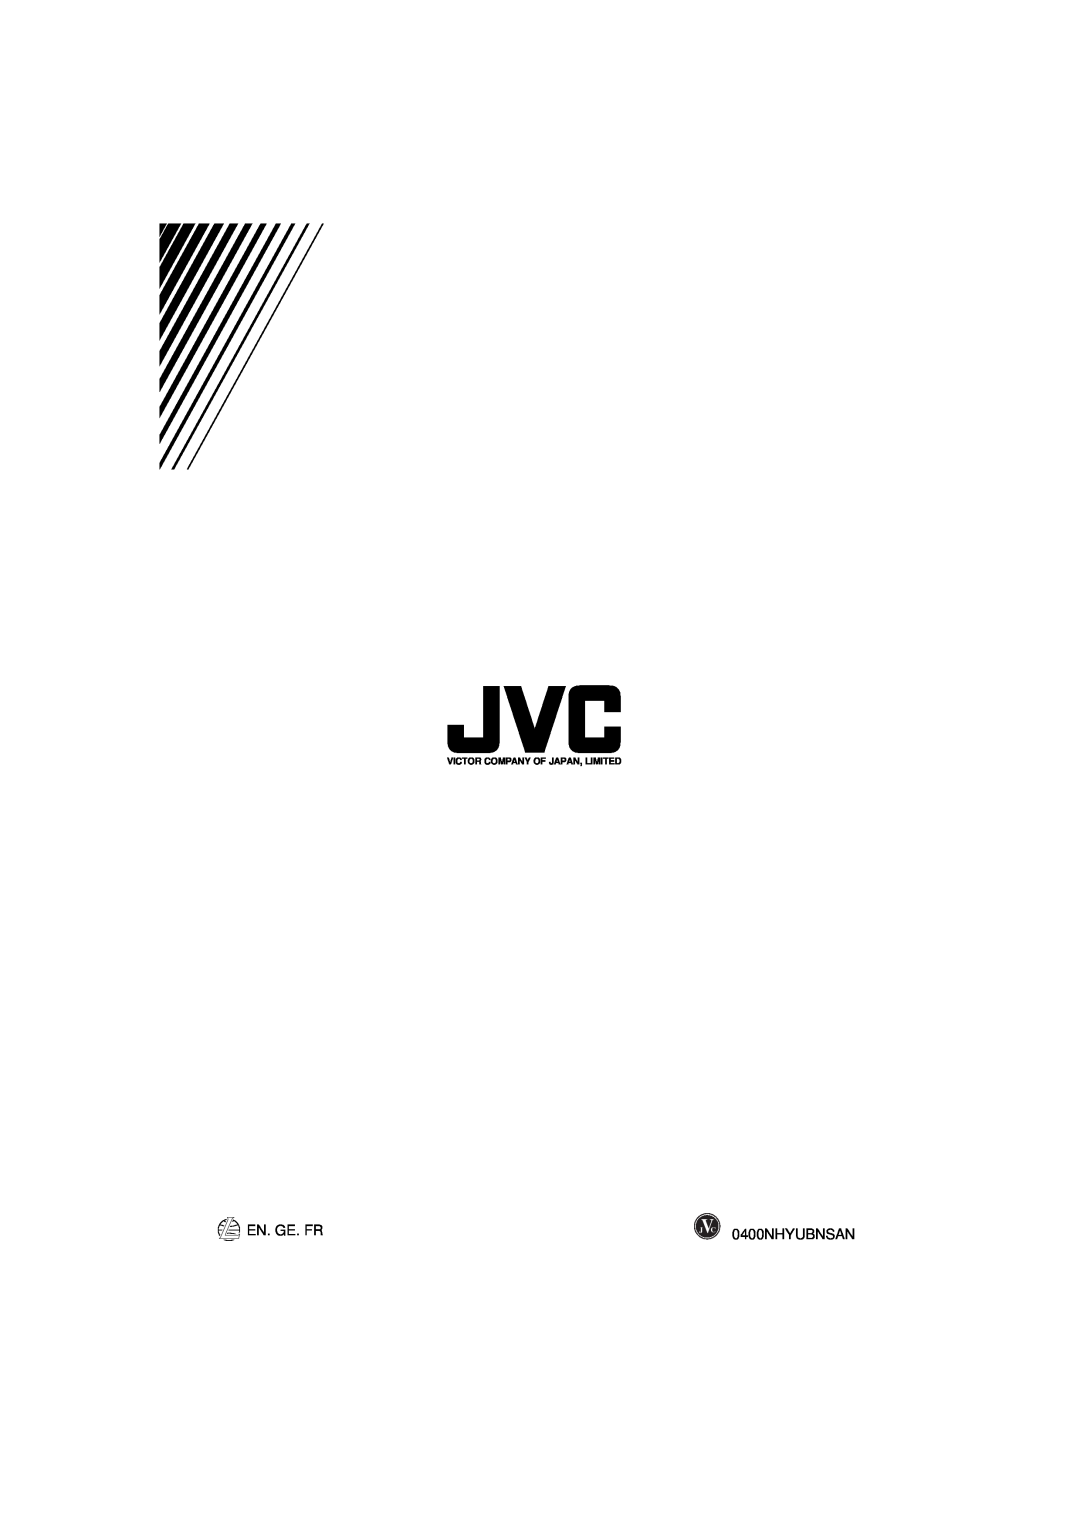 JVC XR-D400SL manual En. Ge. Fr, 0400NHYUBNSAN, Victor Company Of Japan, Limited 